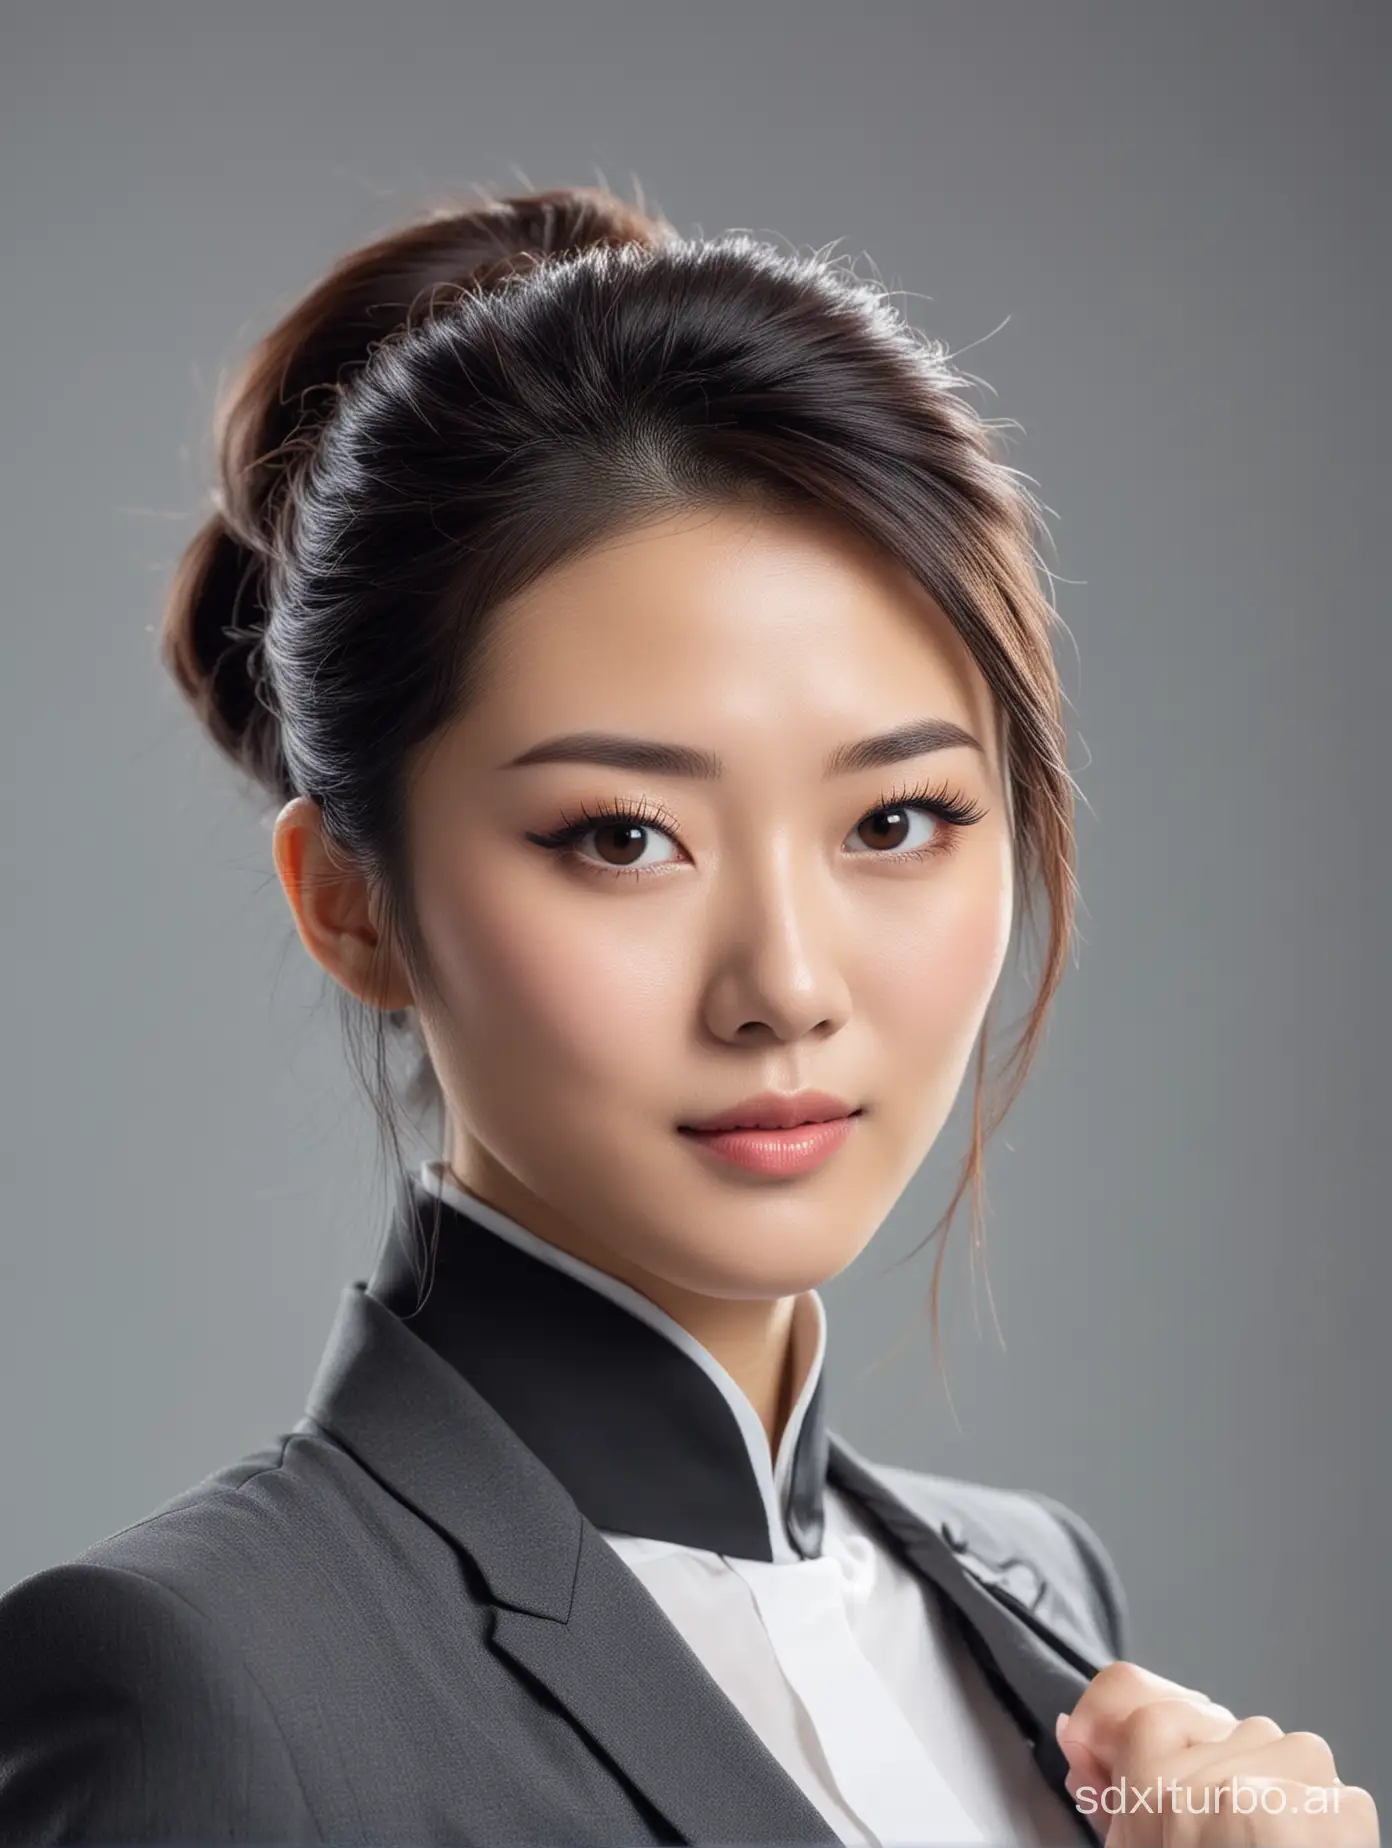 Professional-Chinese-Woman-in-Elegant-Attire-Portrait